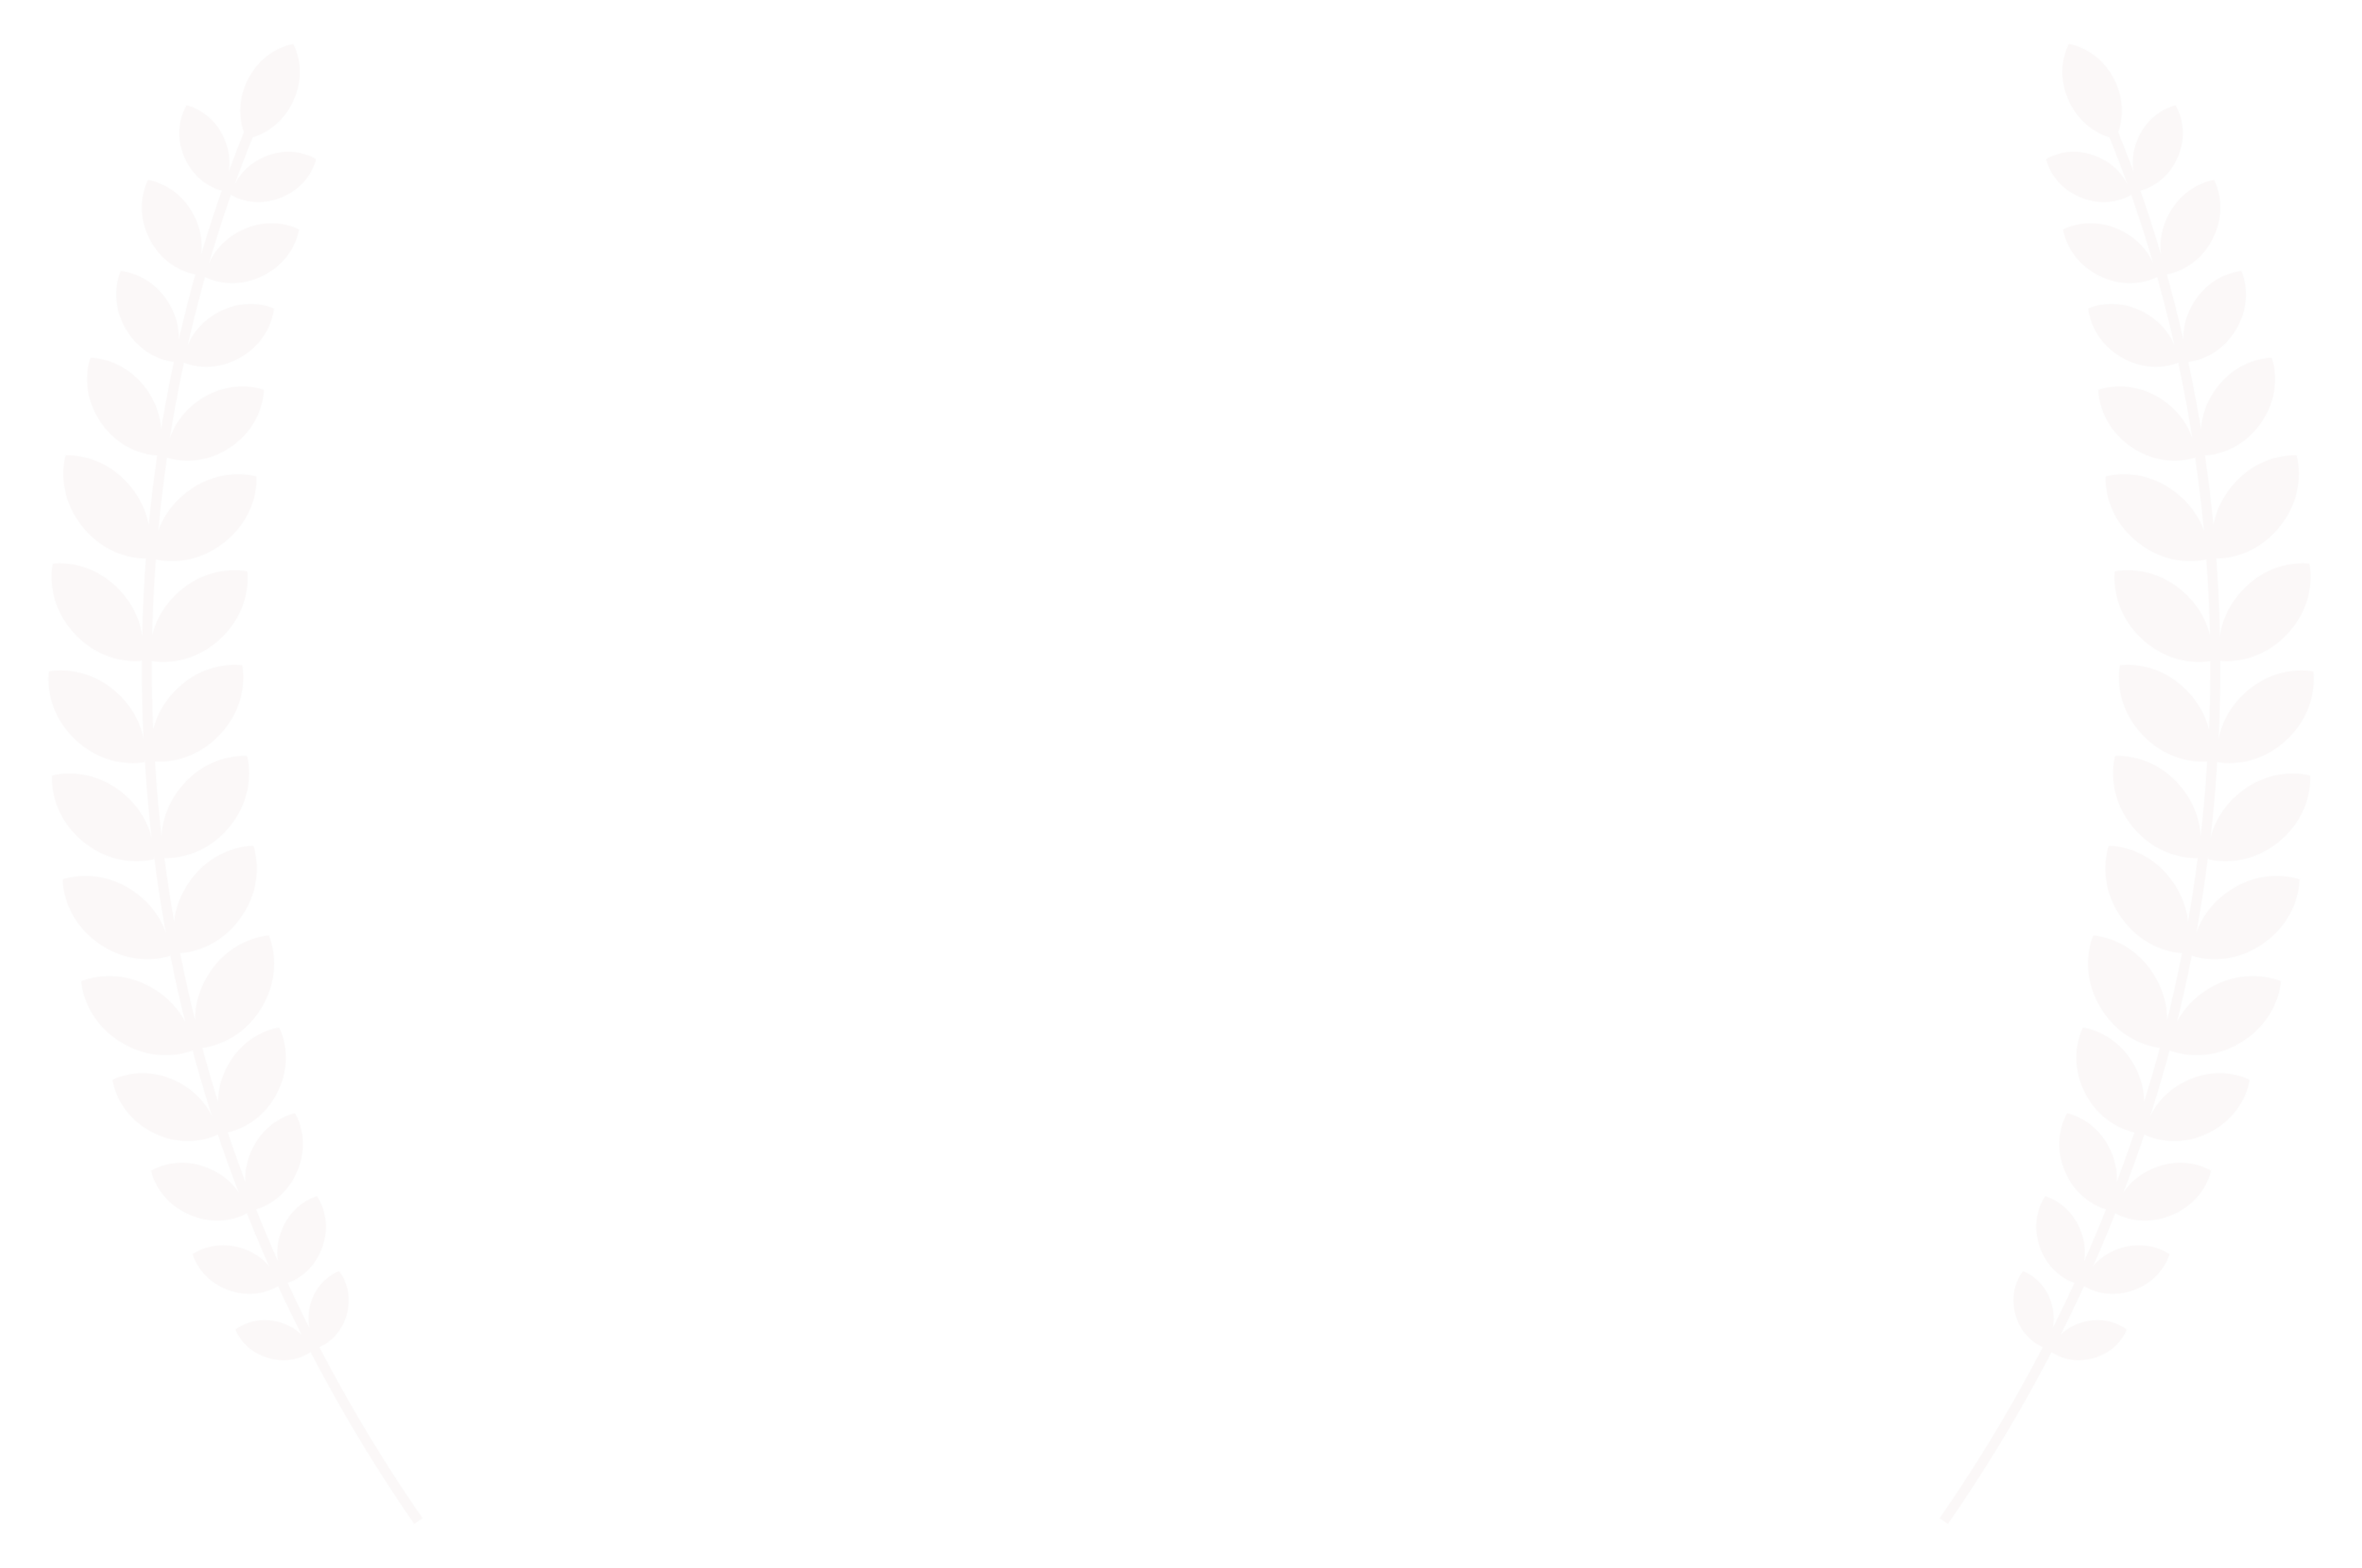 FINALIST-WildlifeVaasaFestival-InternationalNatureFilmFestival-2016 copy.png